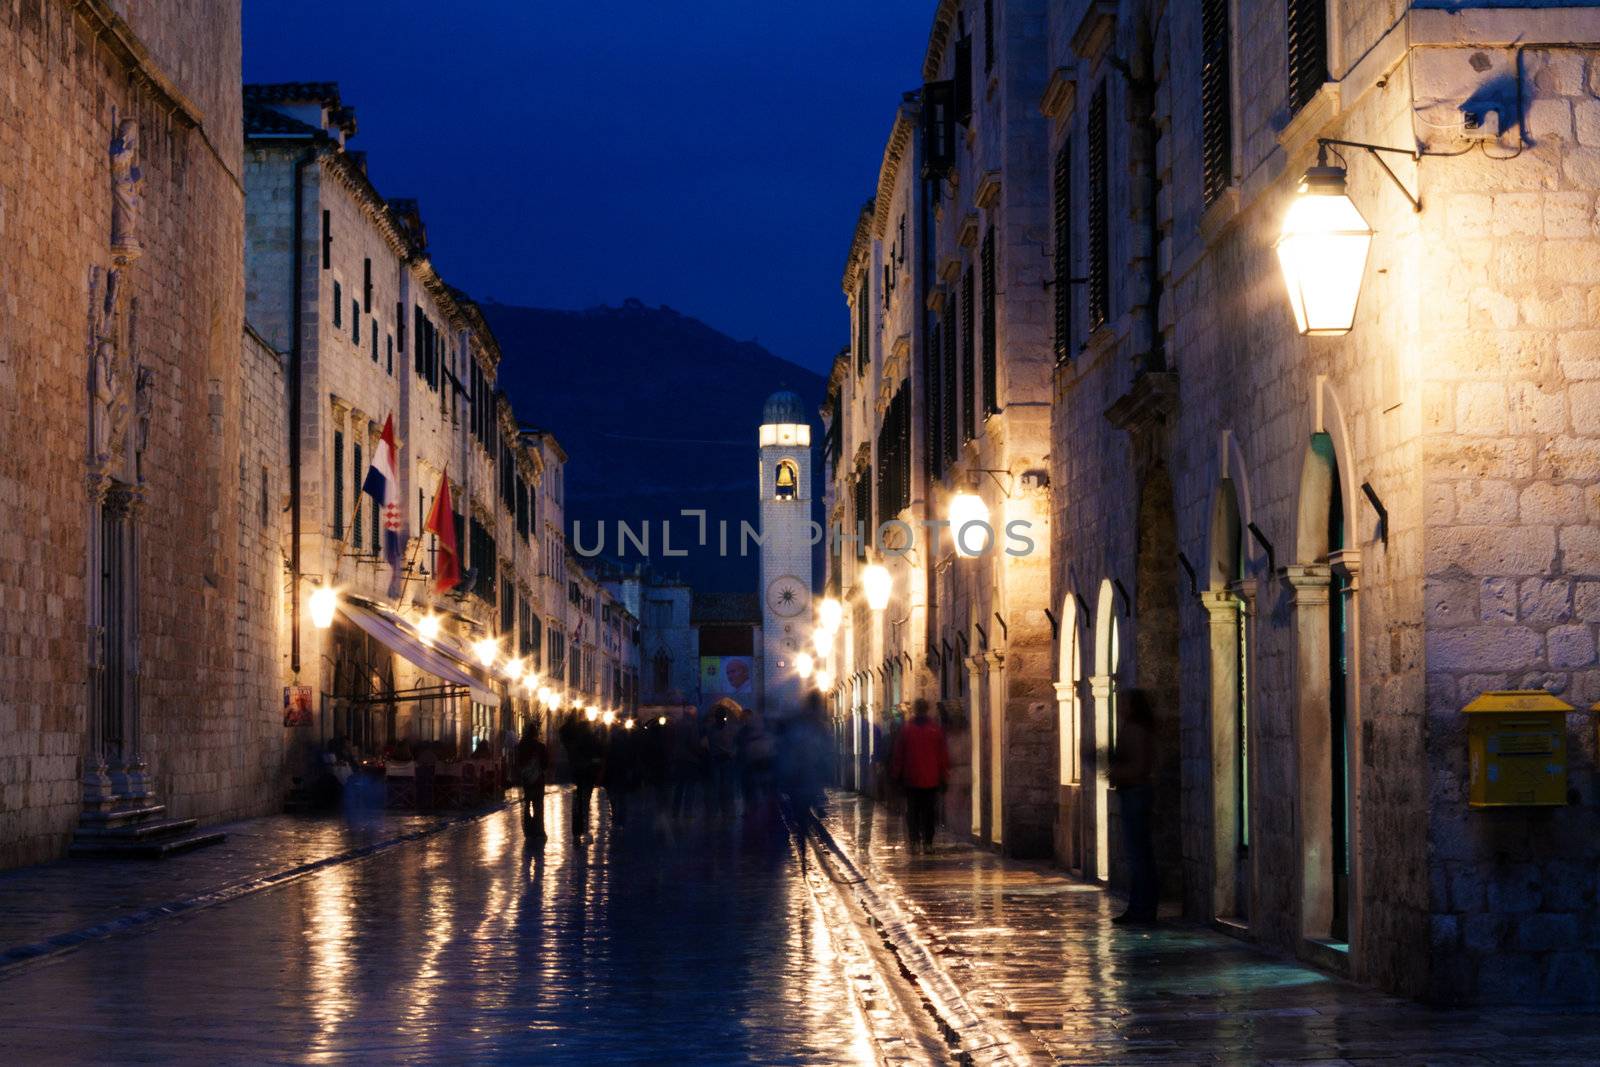 Night shot of the main street of Dubrovnik, Croatia